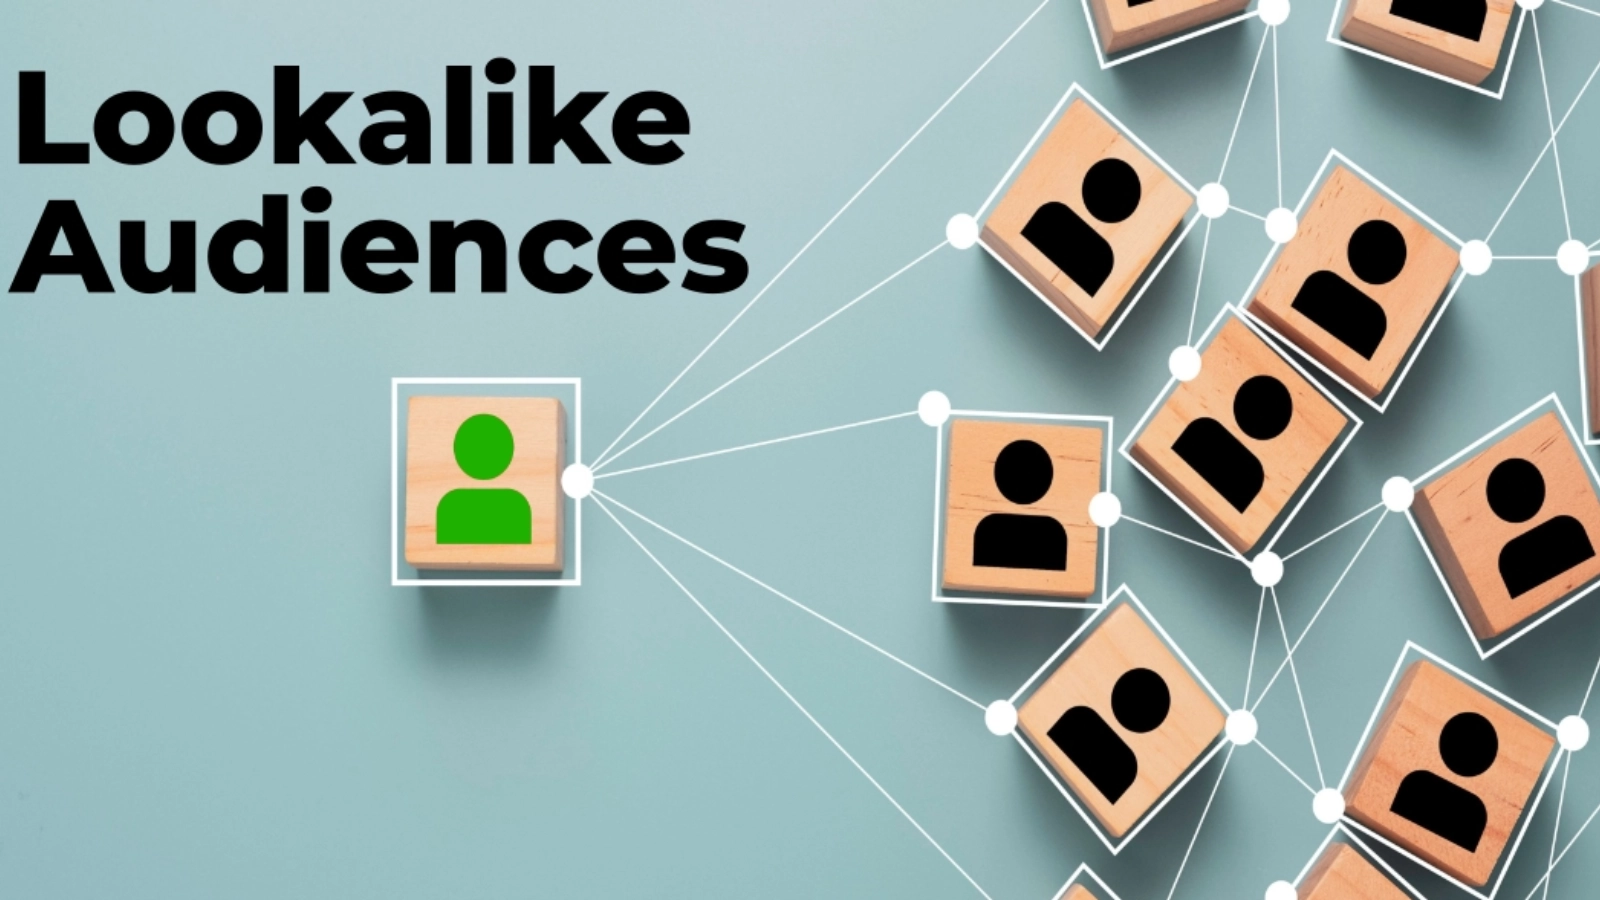 facebook-competitive-advantage-lookalike-audiences